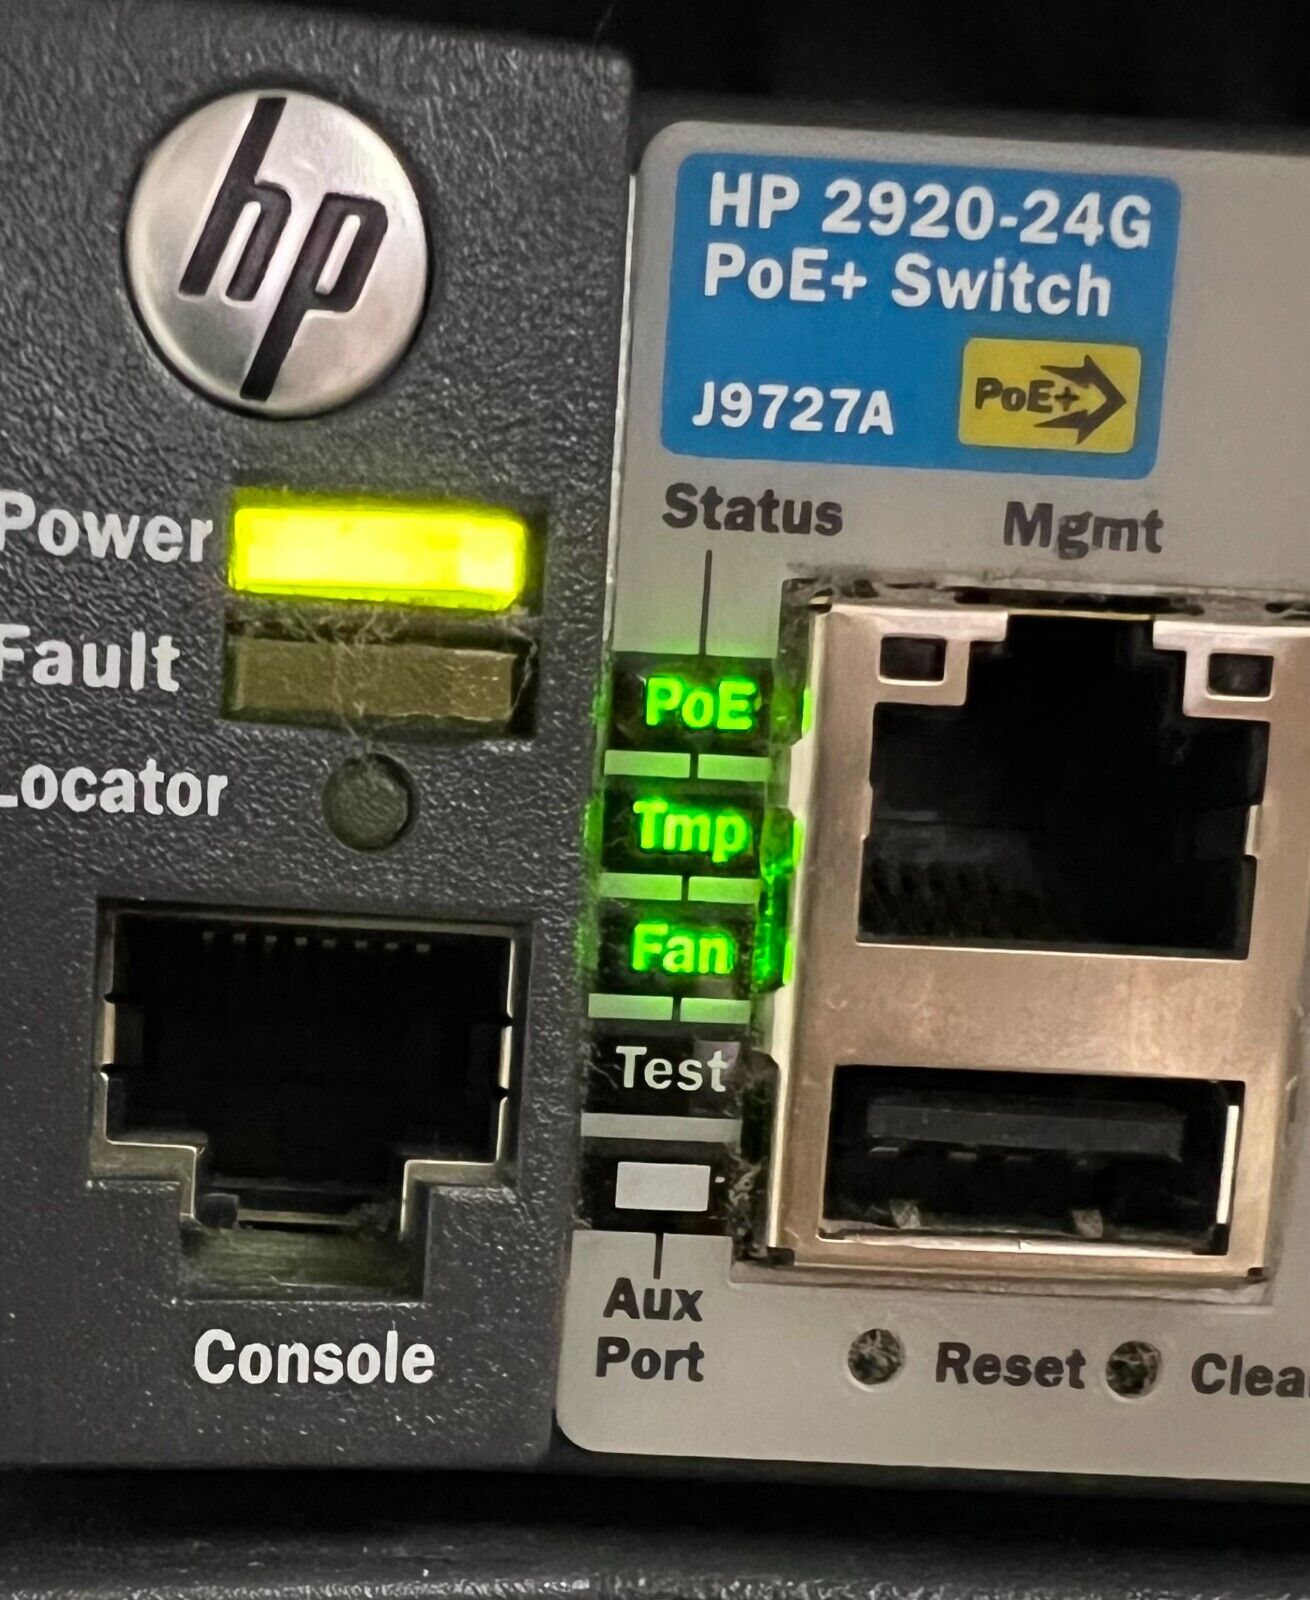 HP 2920-24G-PoE+ Gigabit Ethernet Switch, J9727A